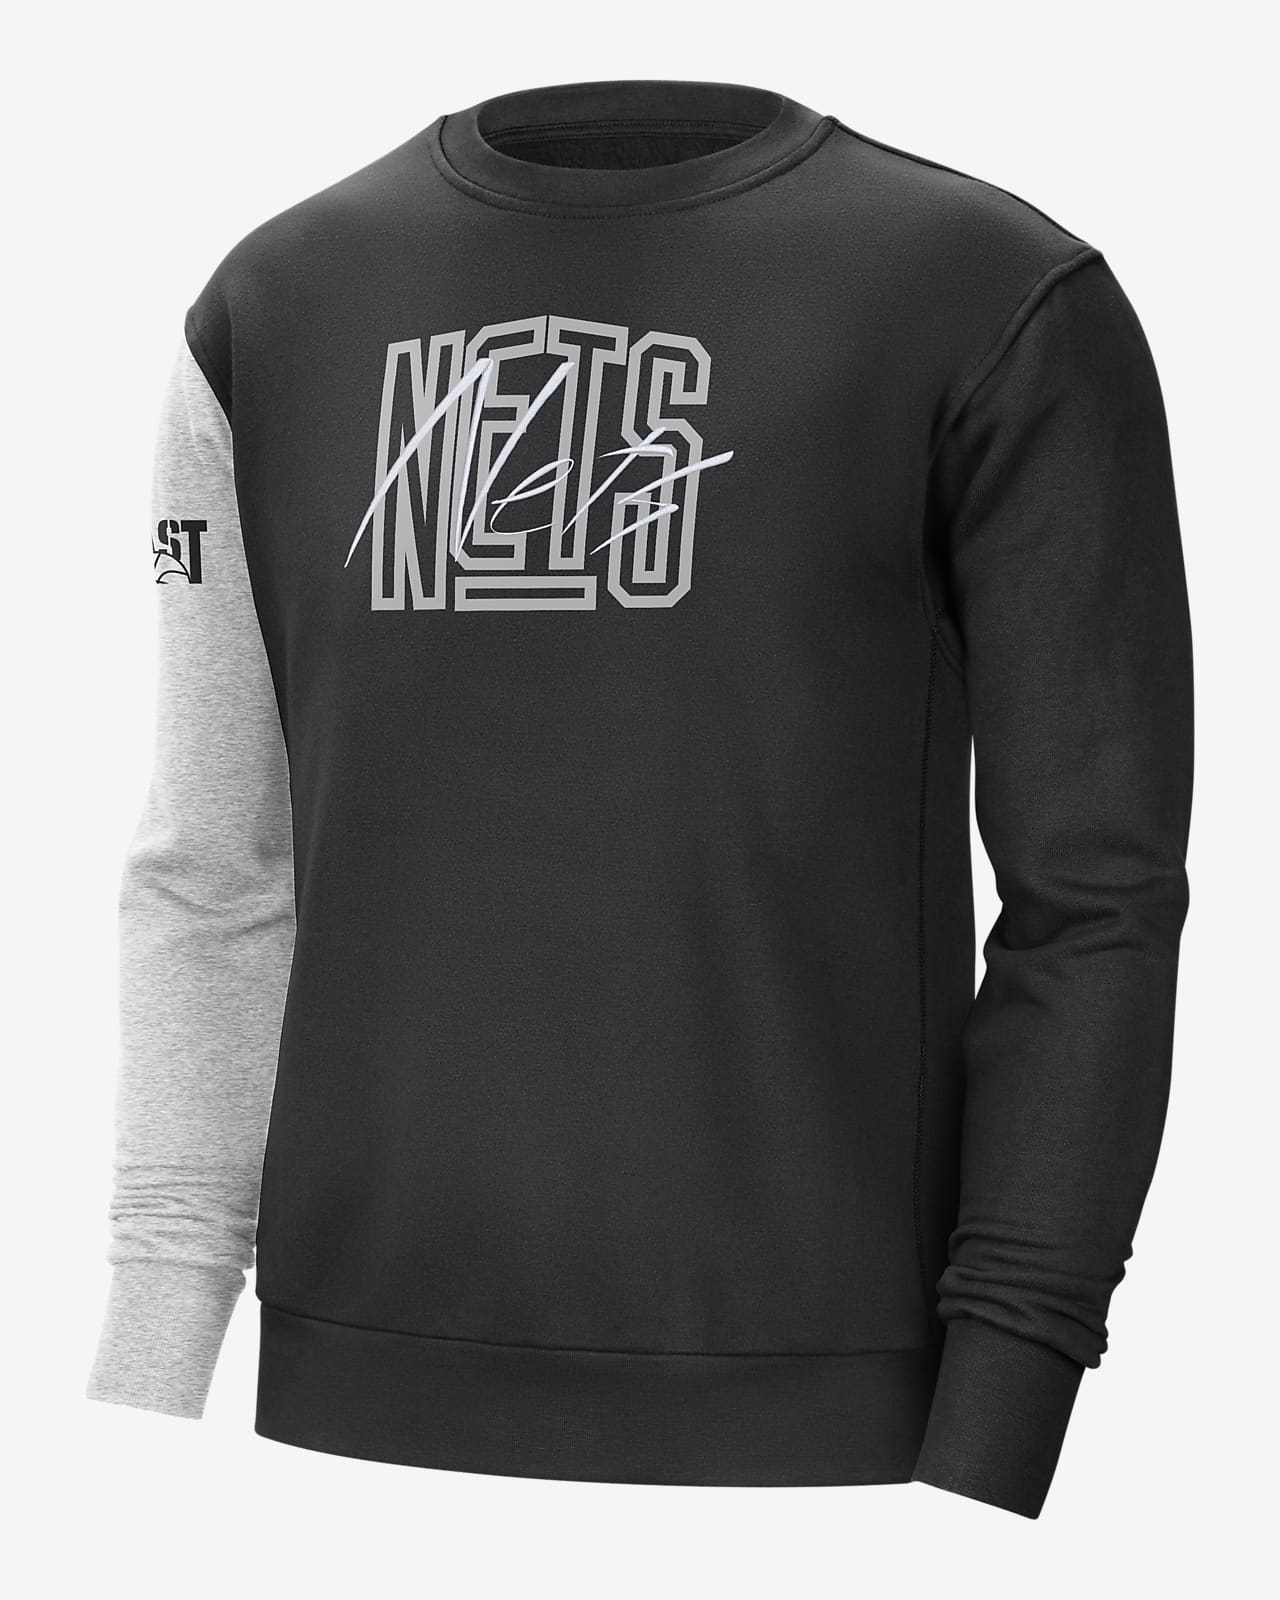 Brooklyn Nets Sweaters, Nets Dress Shirts, Crew Sweaters